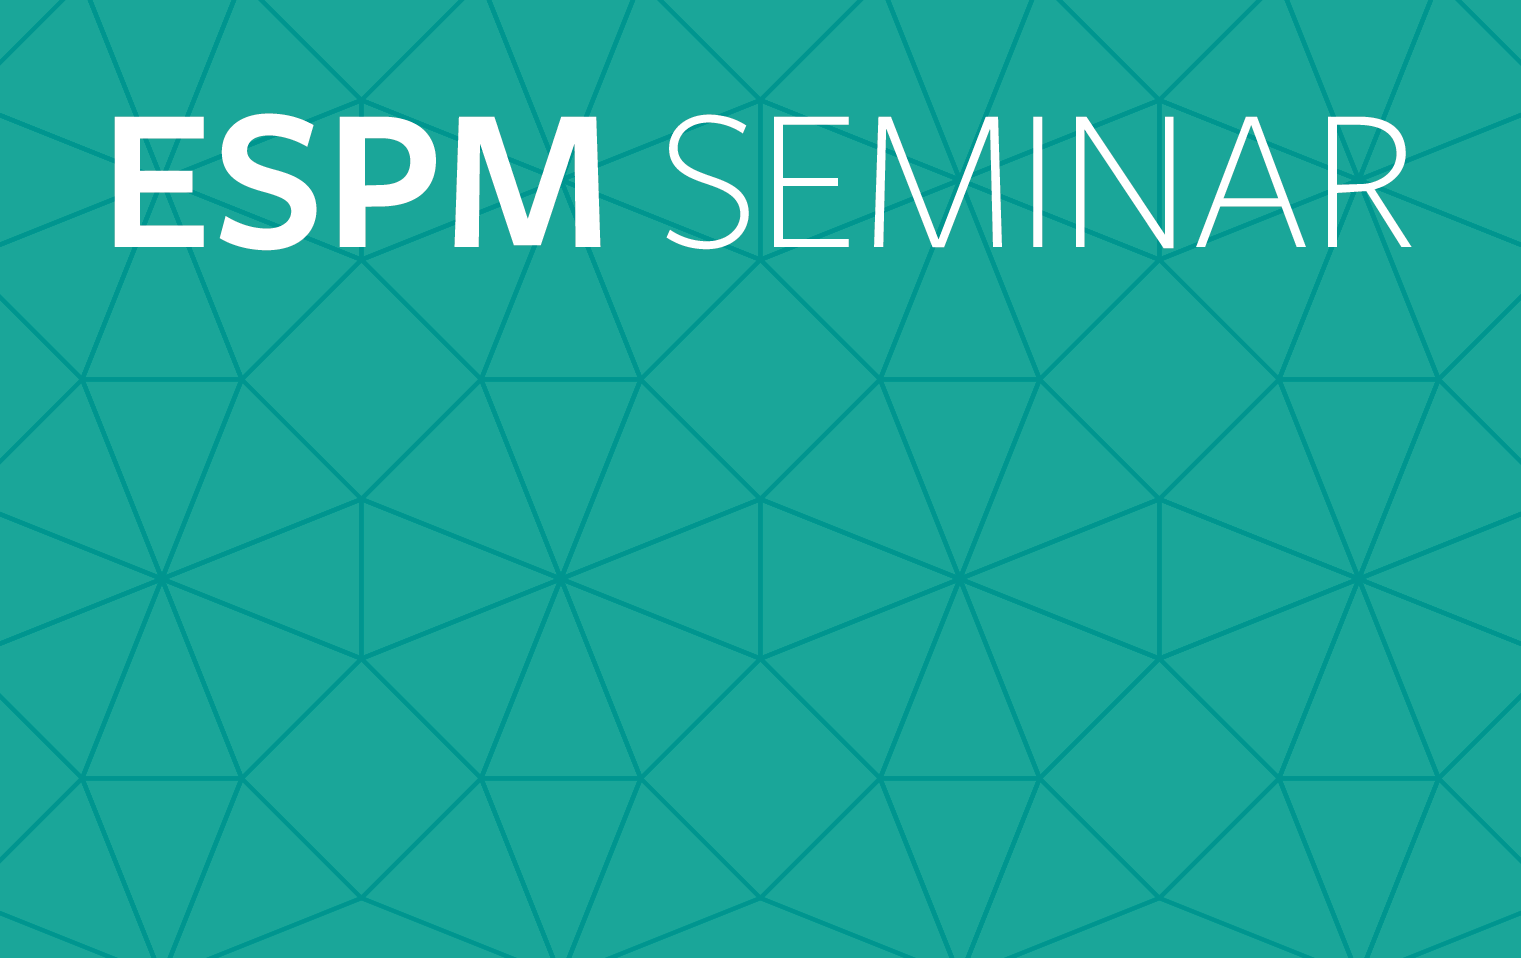 ESPM seminar logo image